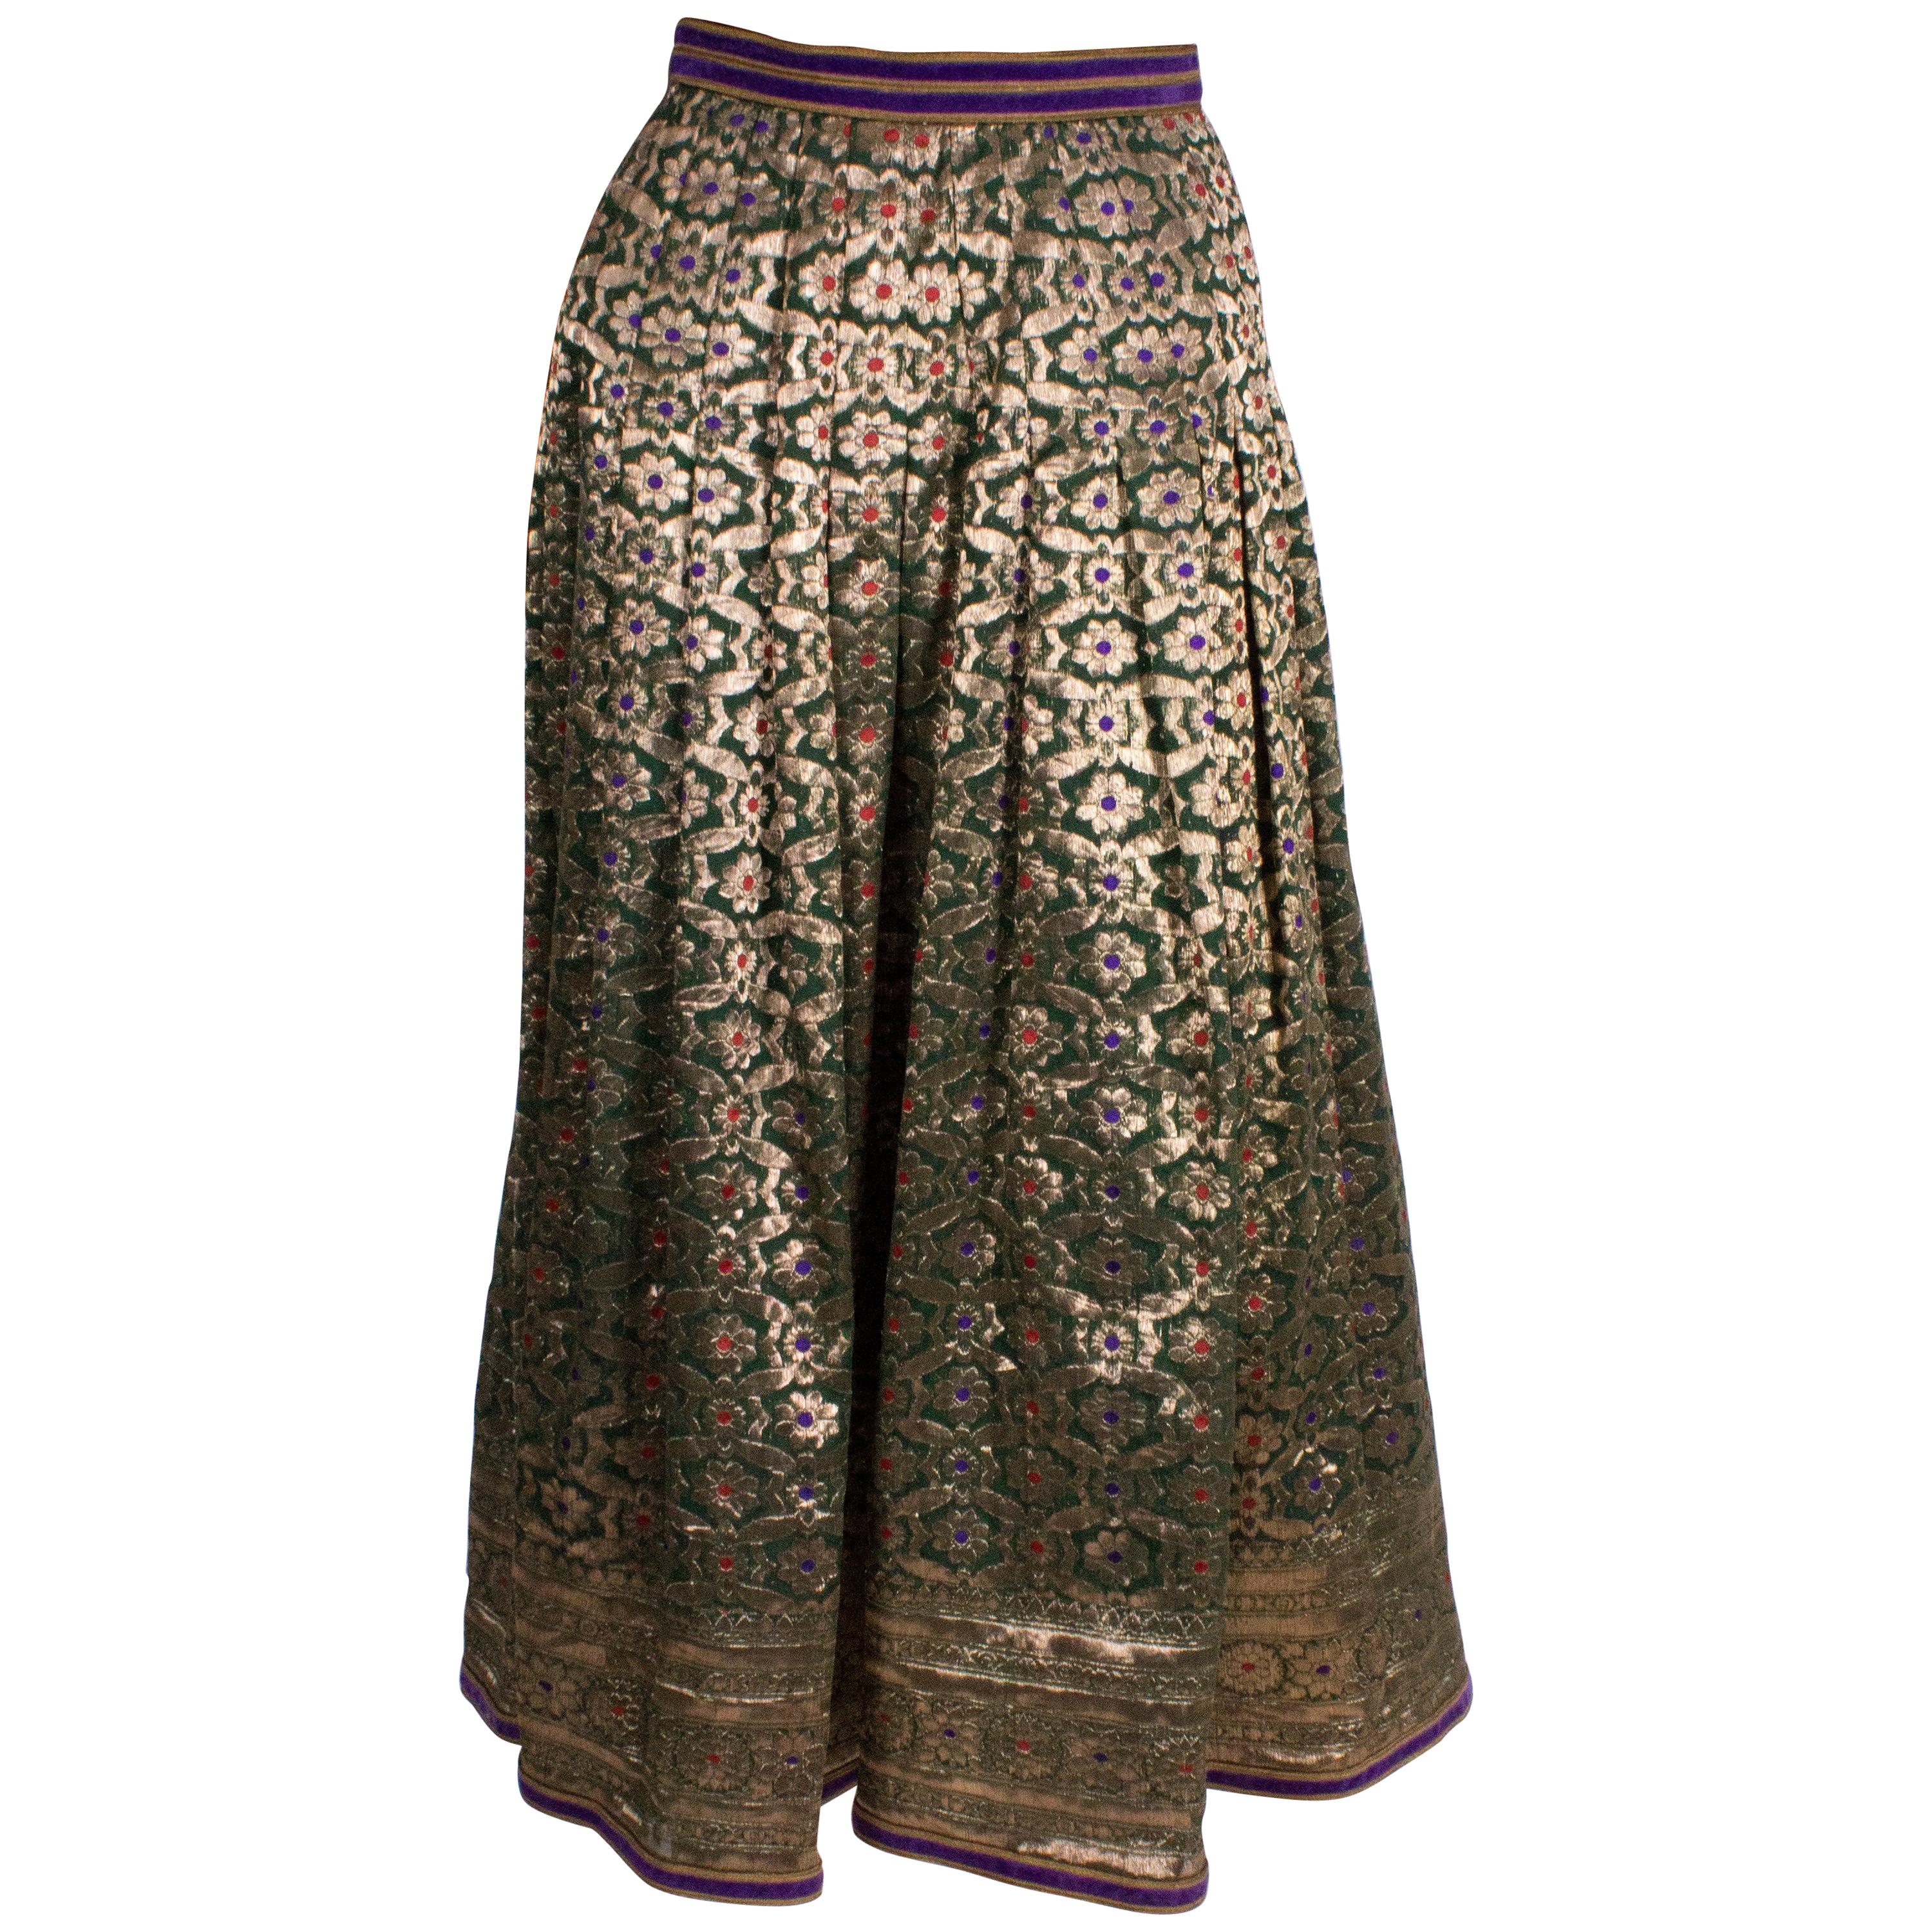    Vintage Regamus London Lame Skirt